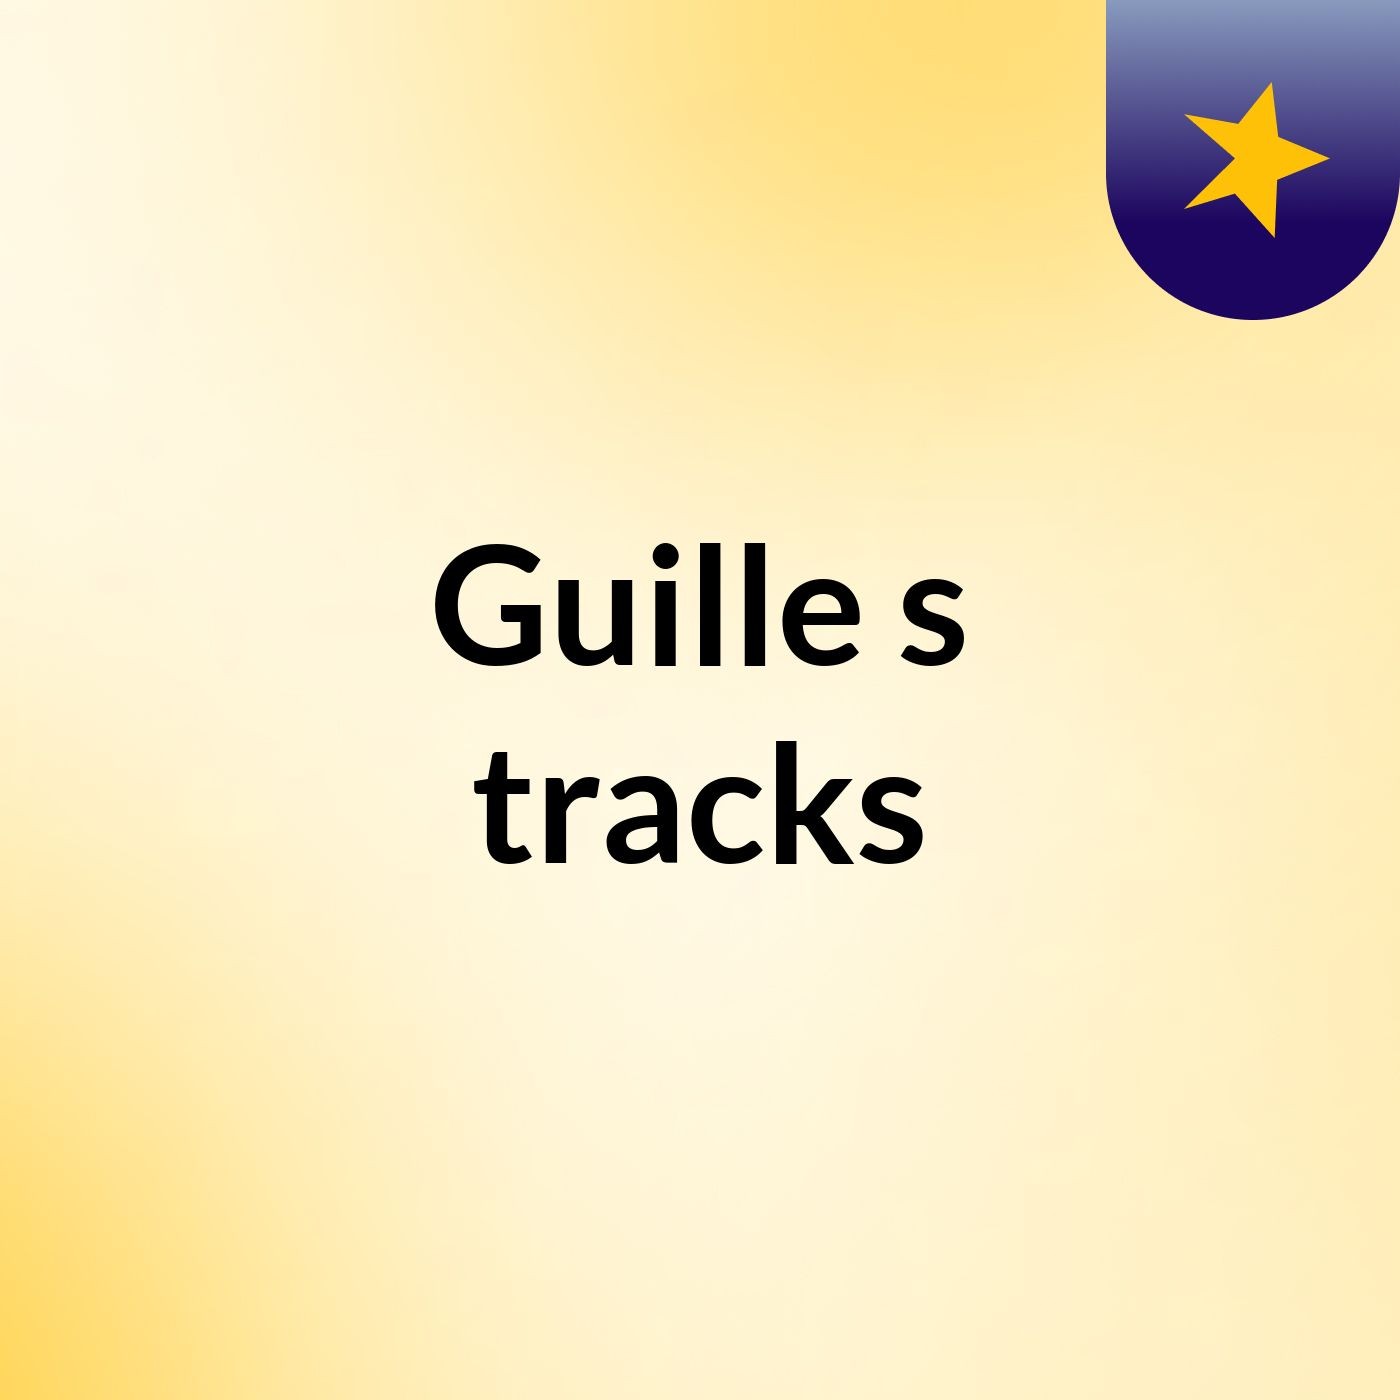 Guille's tracks